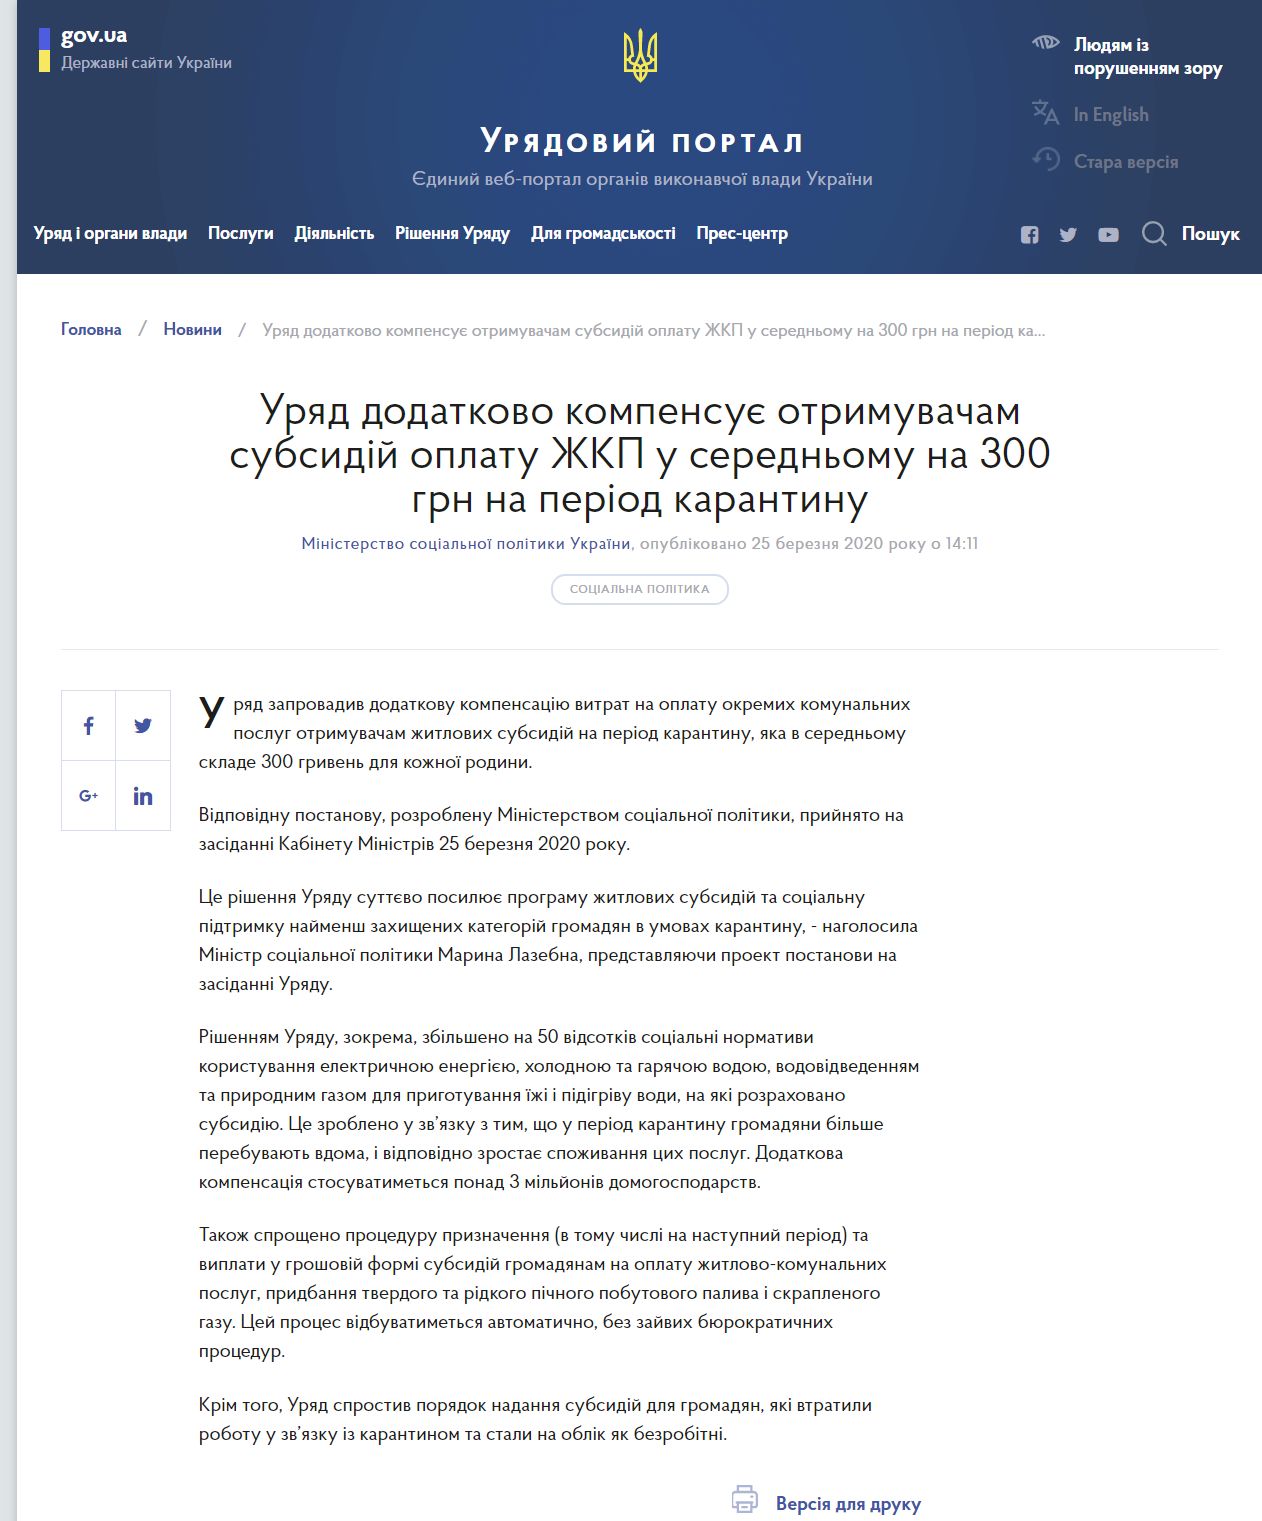 https://www.kmu.gov.ua/news/uryad-dodatkovo-kompensuye-otrimuvacham-subsidij-oplatu-zhkp-u-serednomu-na-300-grn-na-period-karantinu